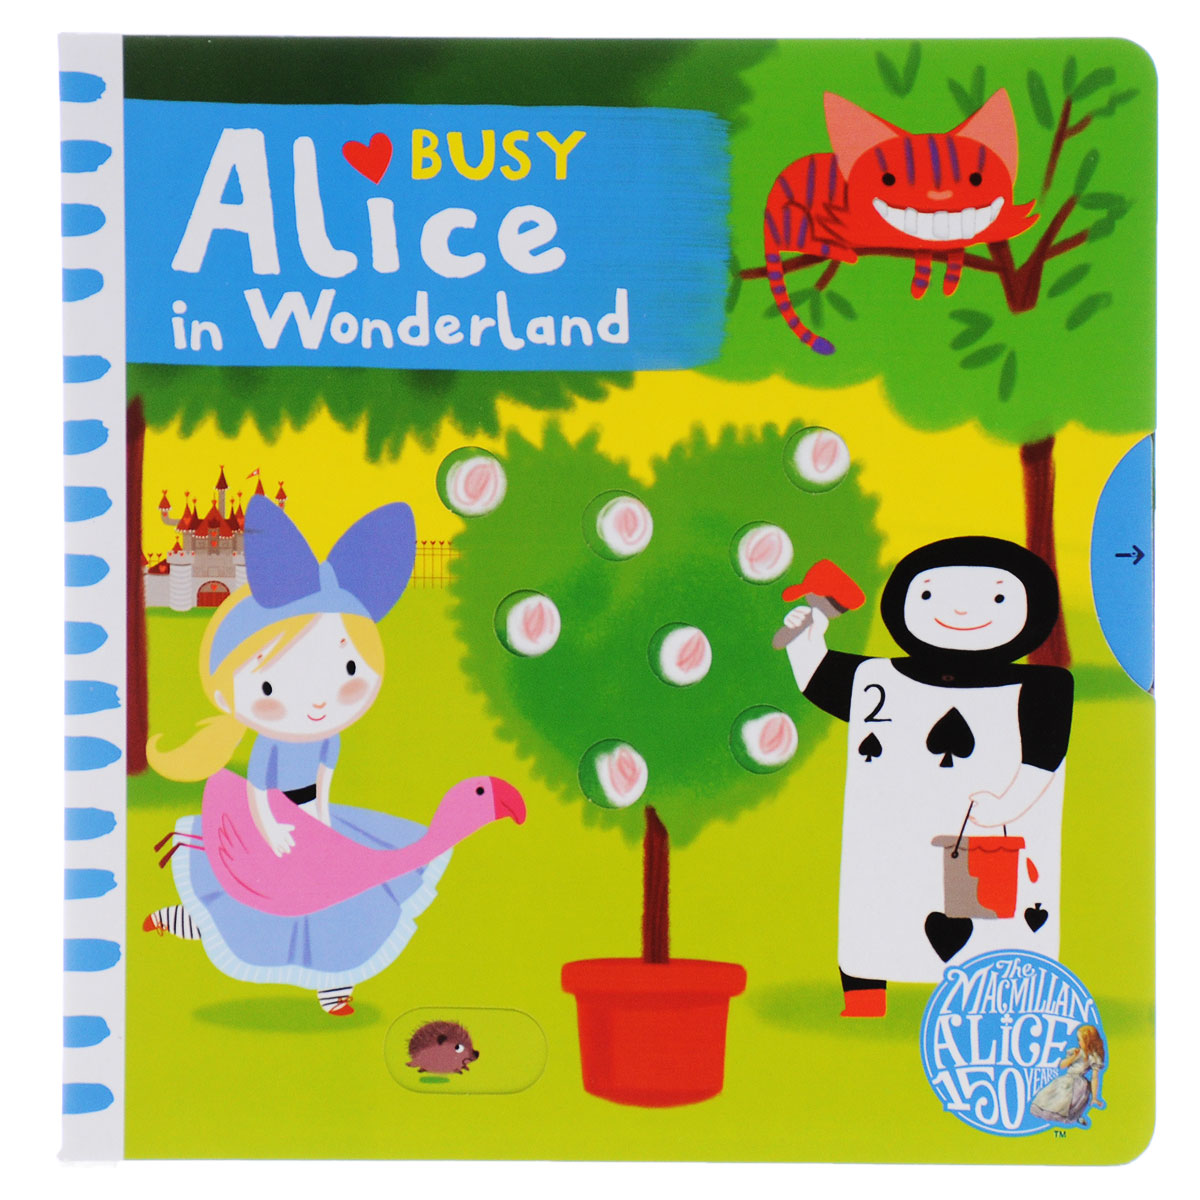 Busy Alice in Wonderland